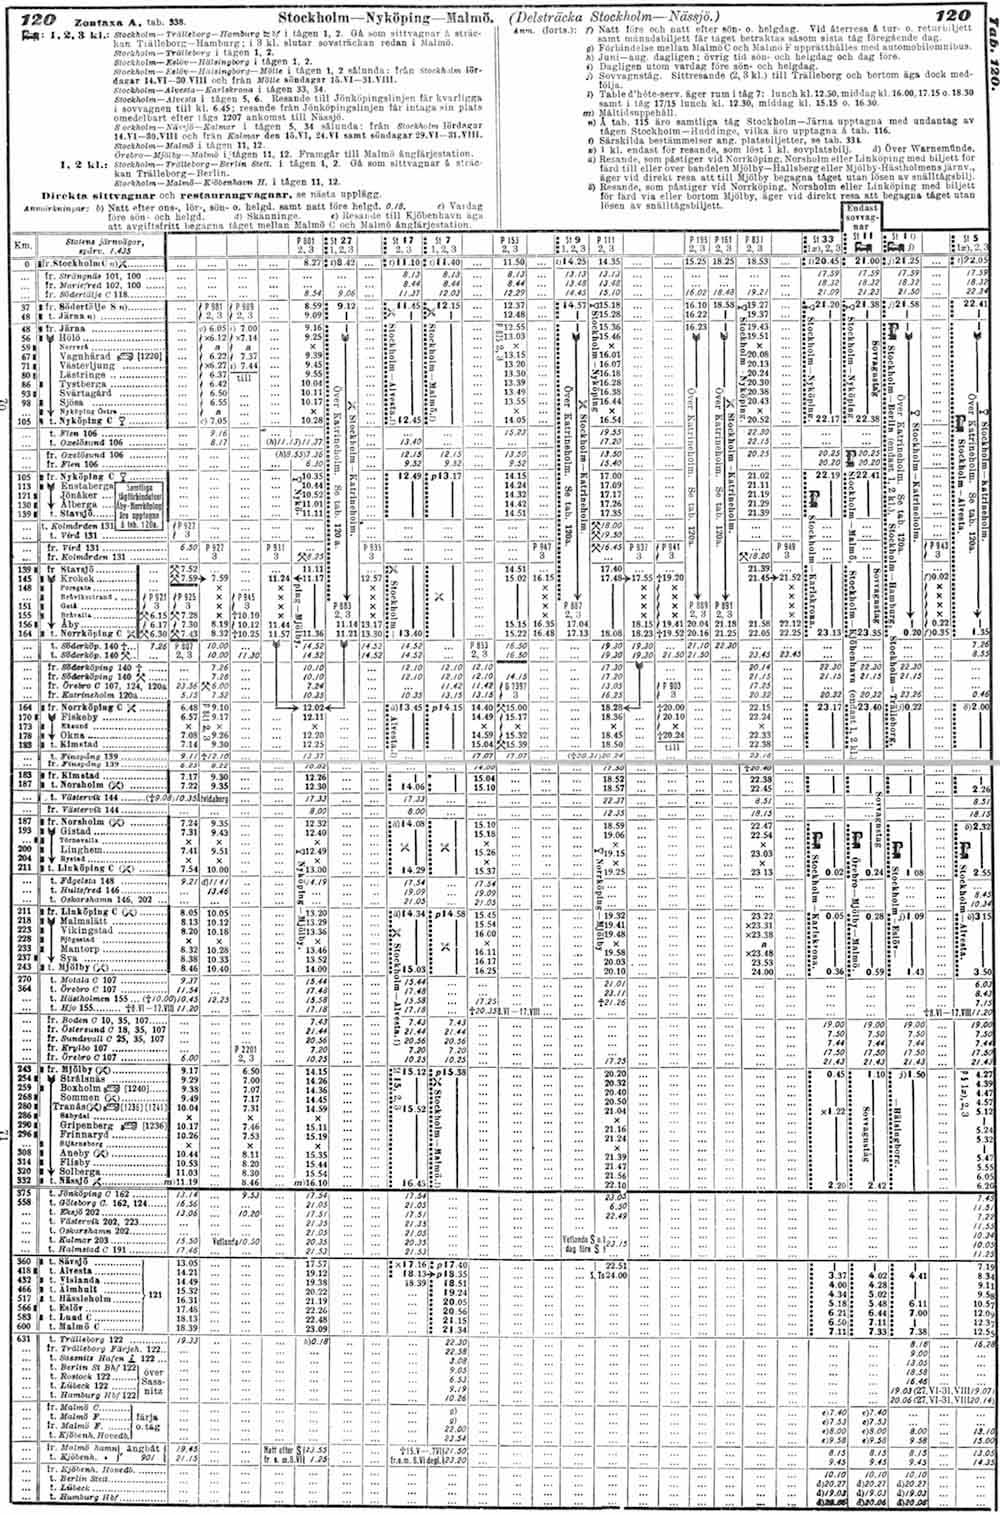 Timetable eastern main line